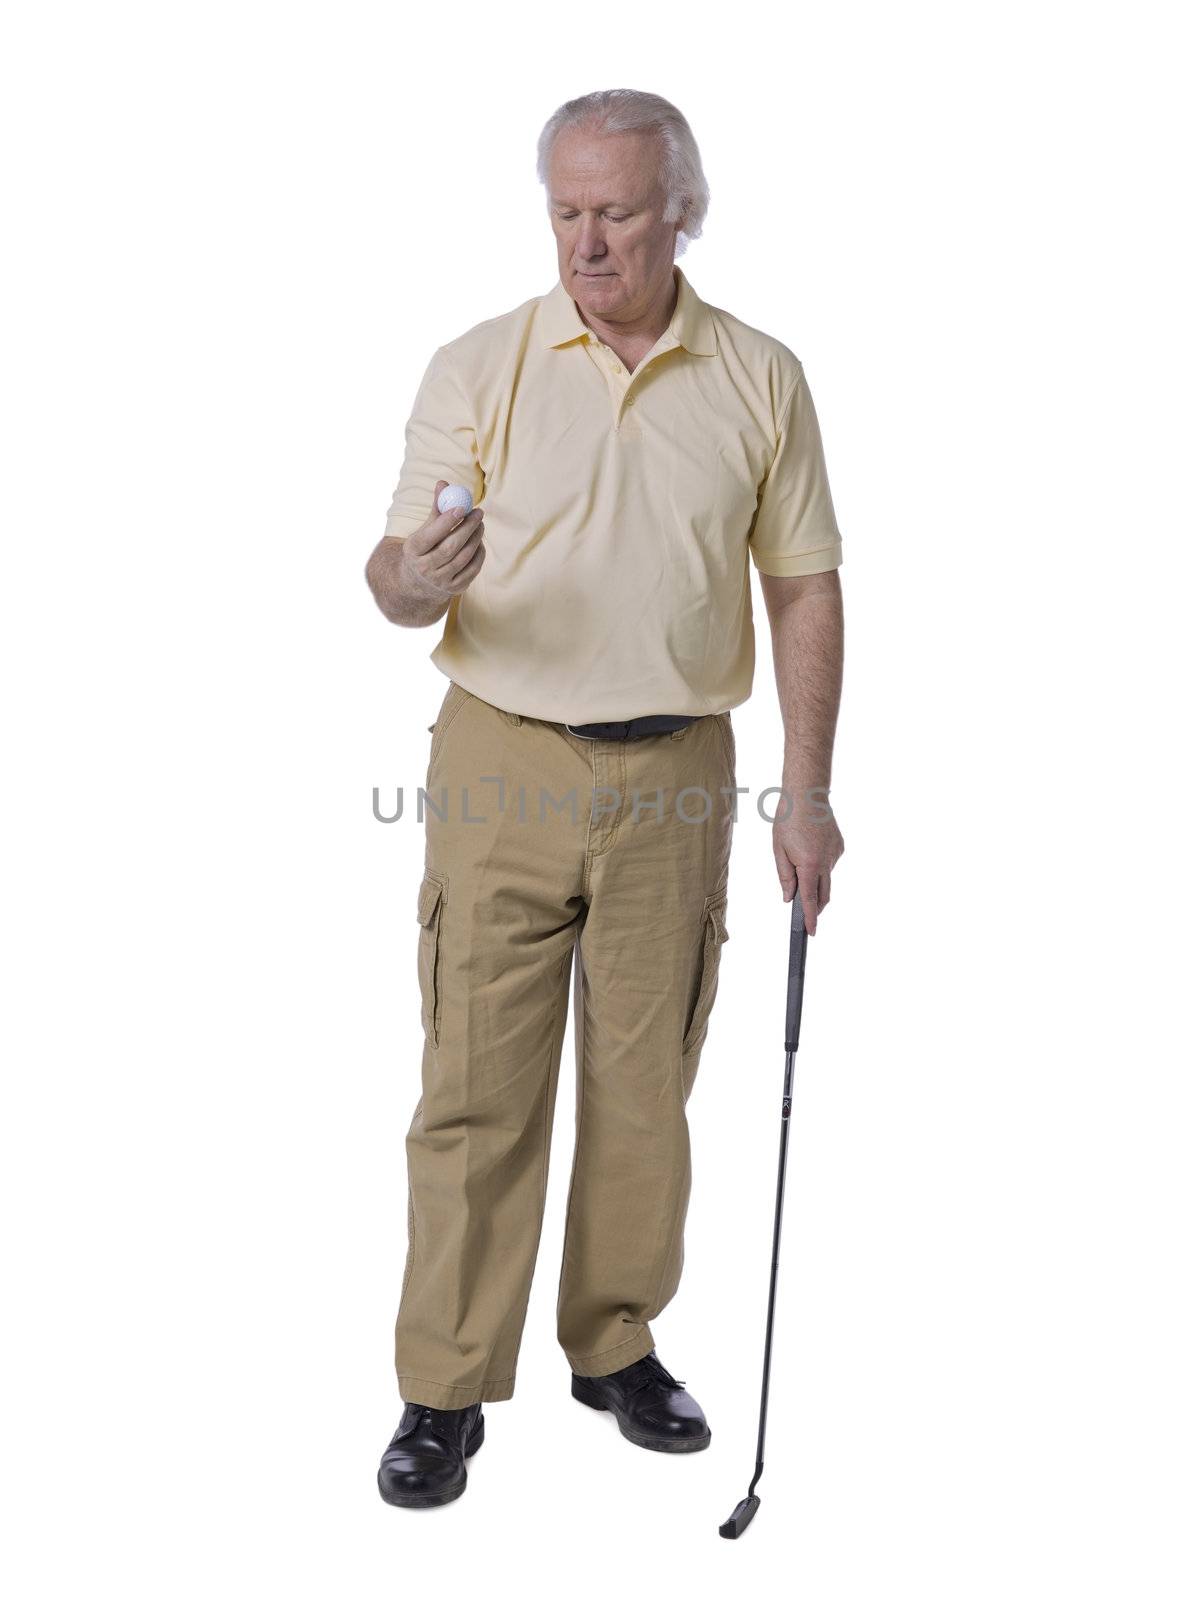 old man golfer holding golf ball by kozzi